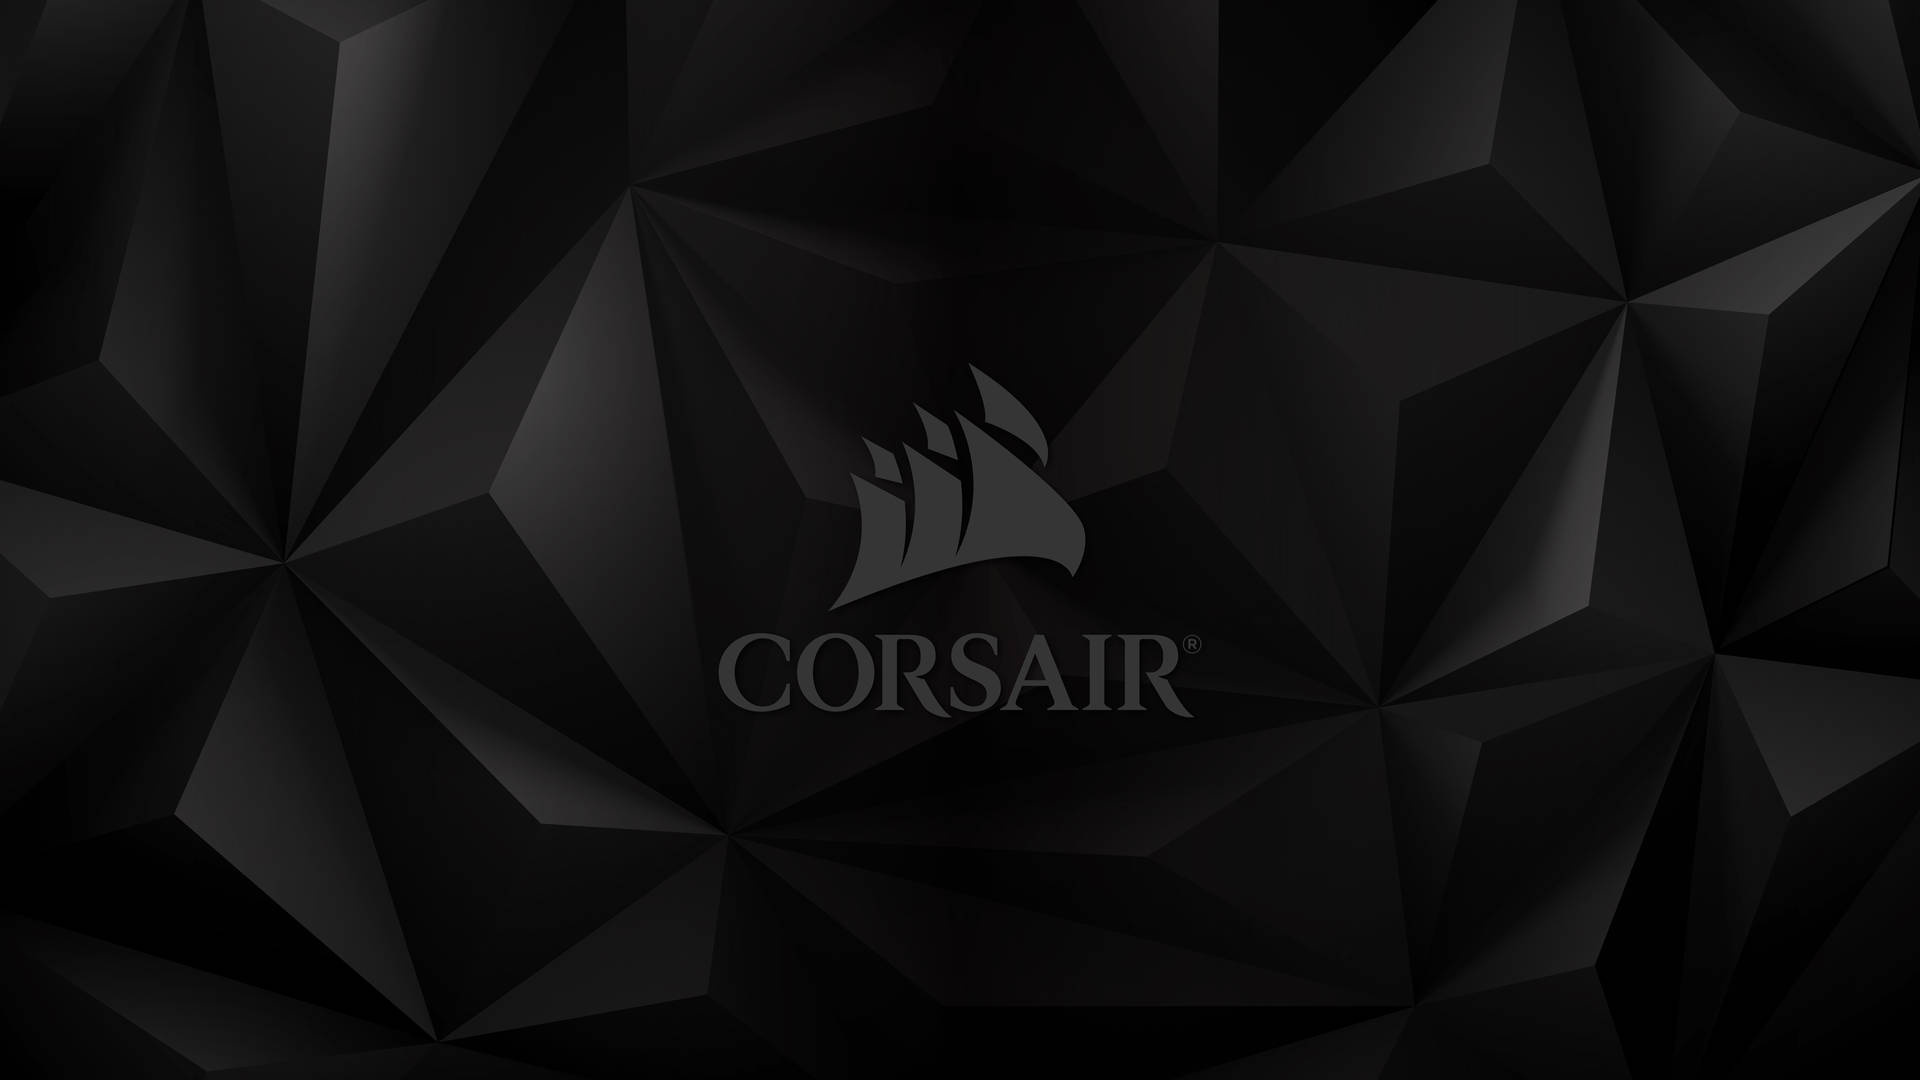 Corsair Black Geometric Pattern Background